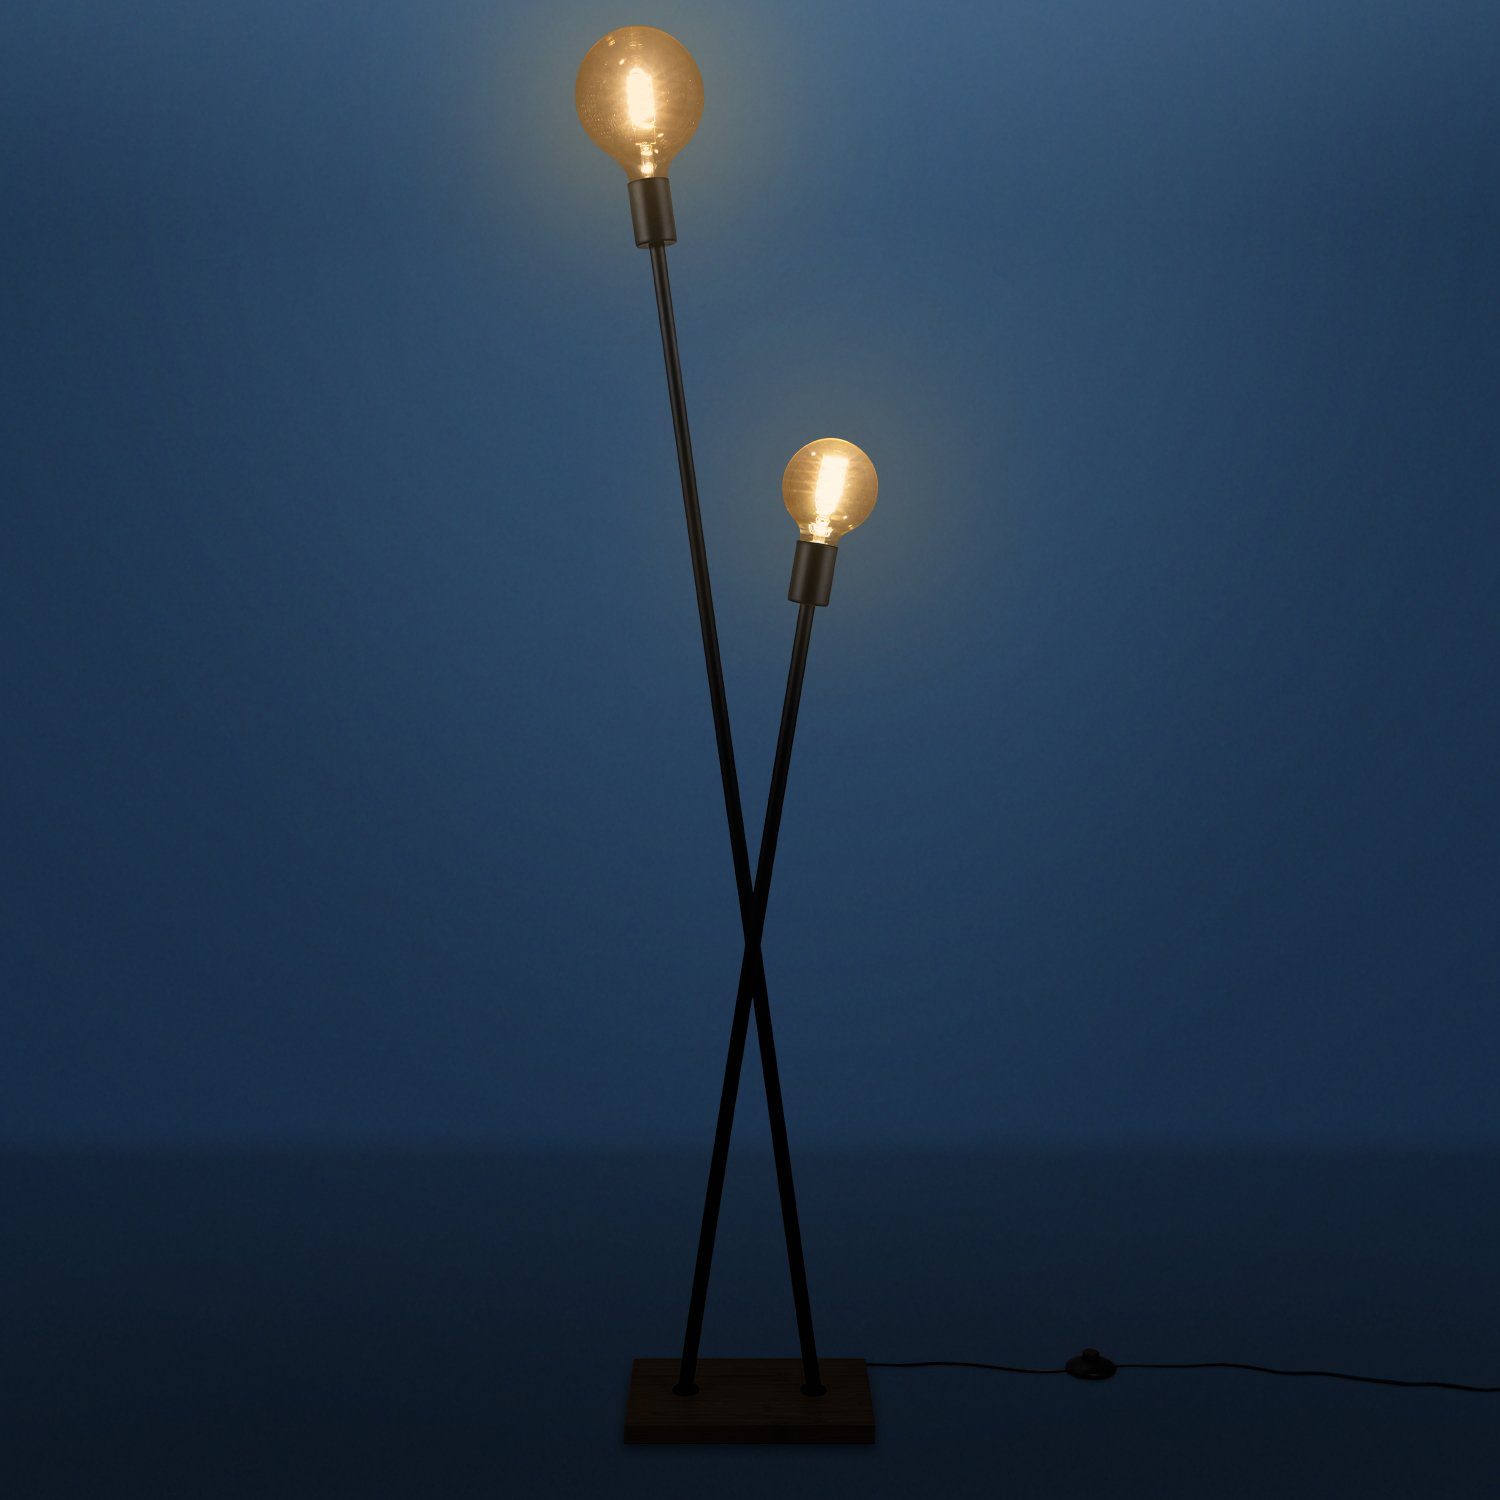 Retro ohne Wohnzimmer E27 IKS, Home Vintage Lampe Leuchtmittel, Industrial Design Stehlampe Paco Stehlampe LED